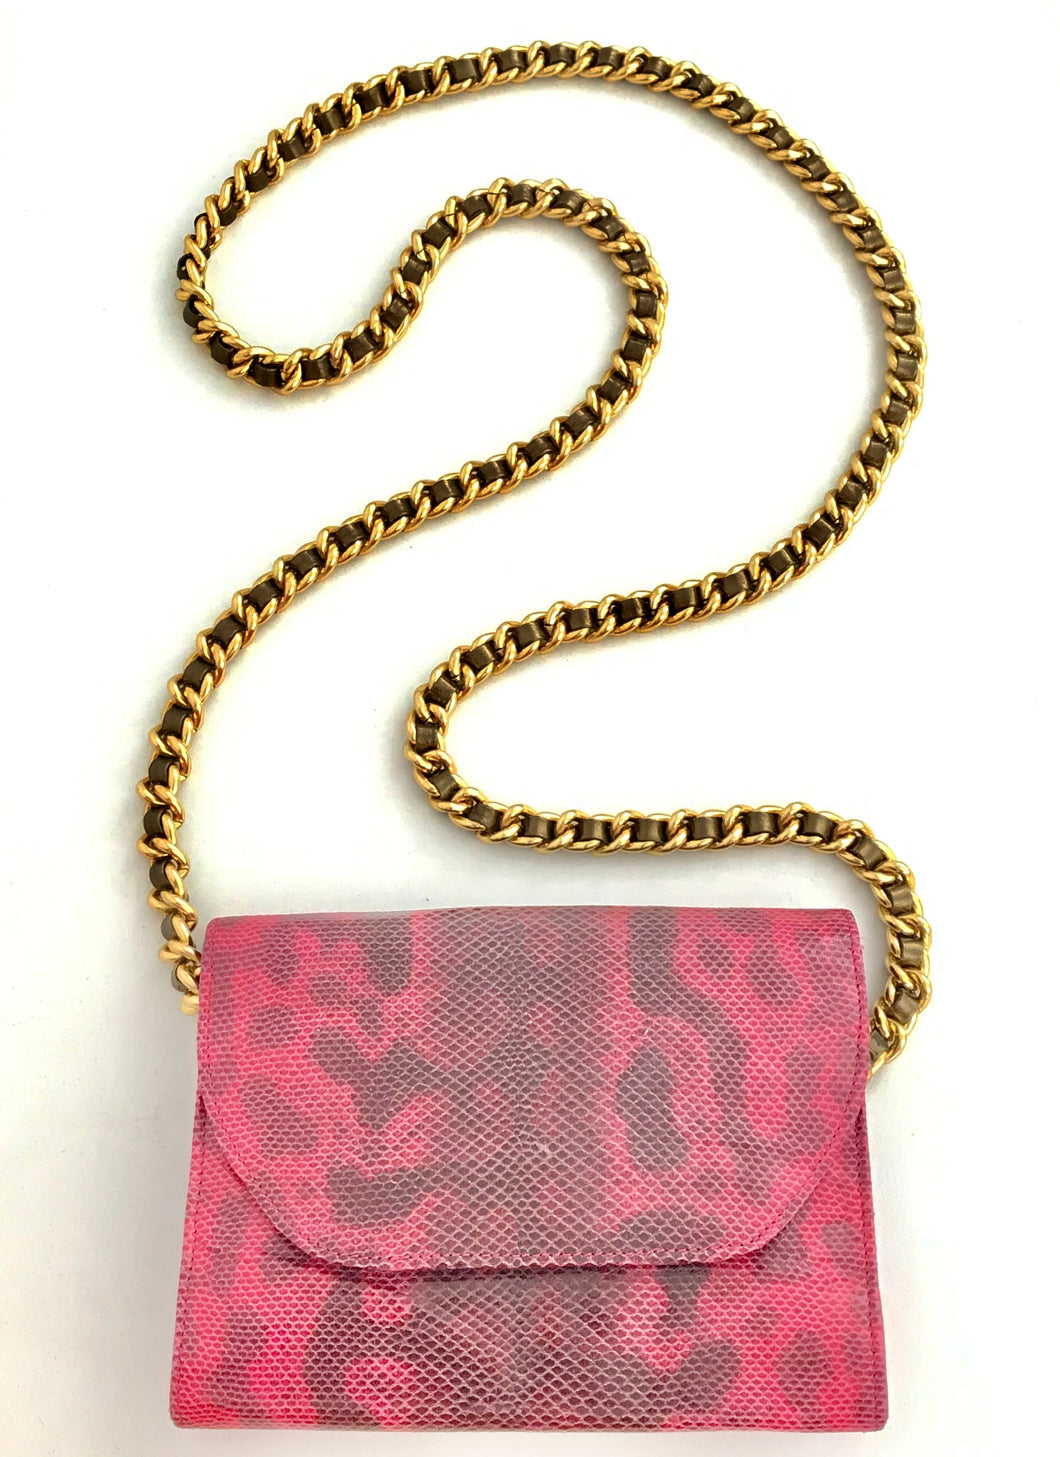 1980's Hot Pink Snake Print Leather Mini Purse by Arlene LaMarca